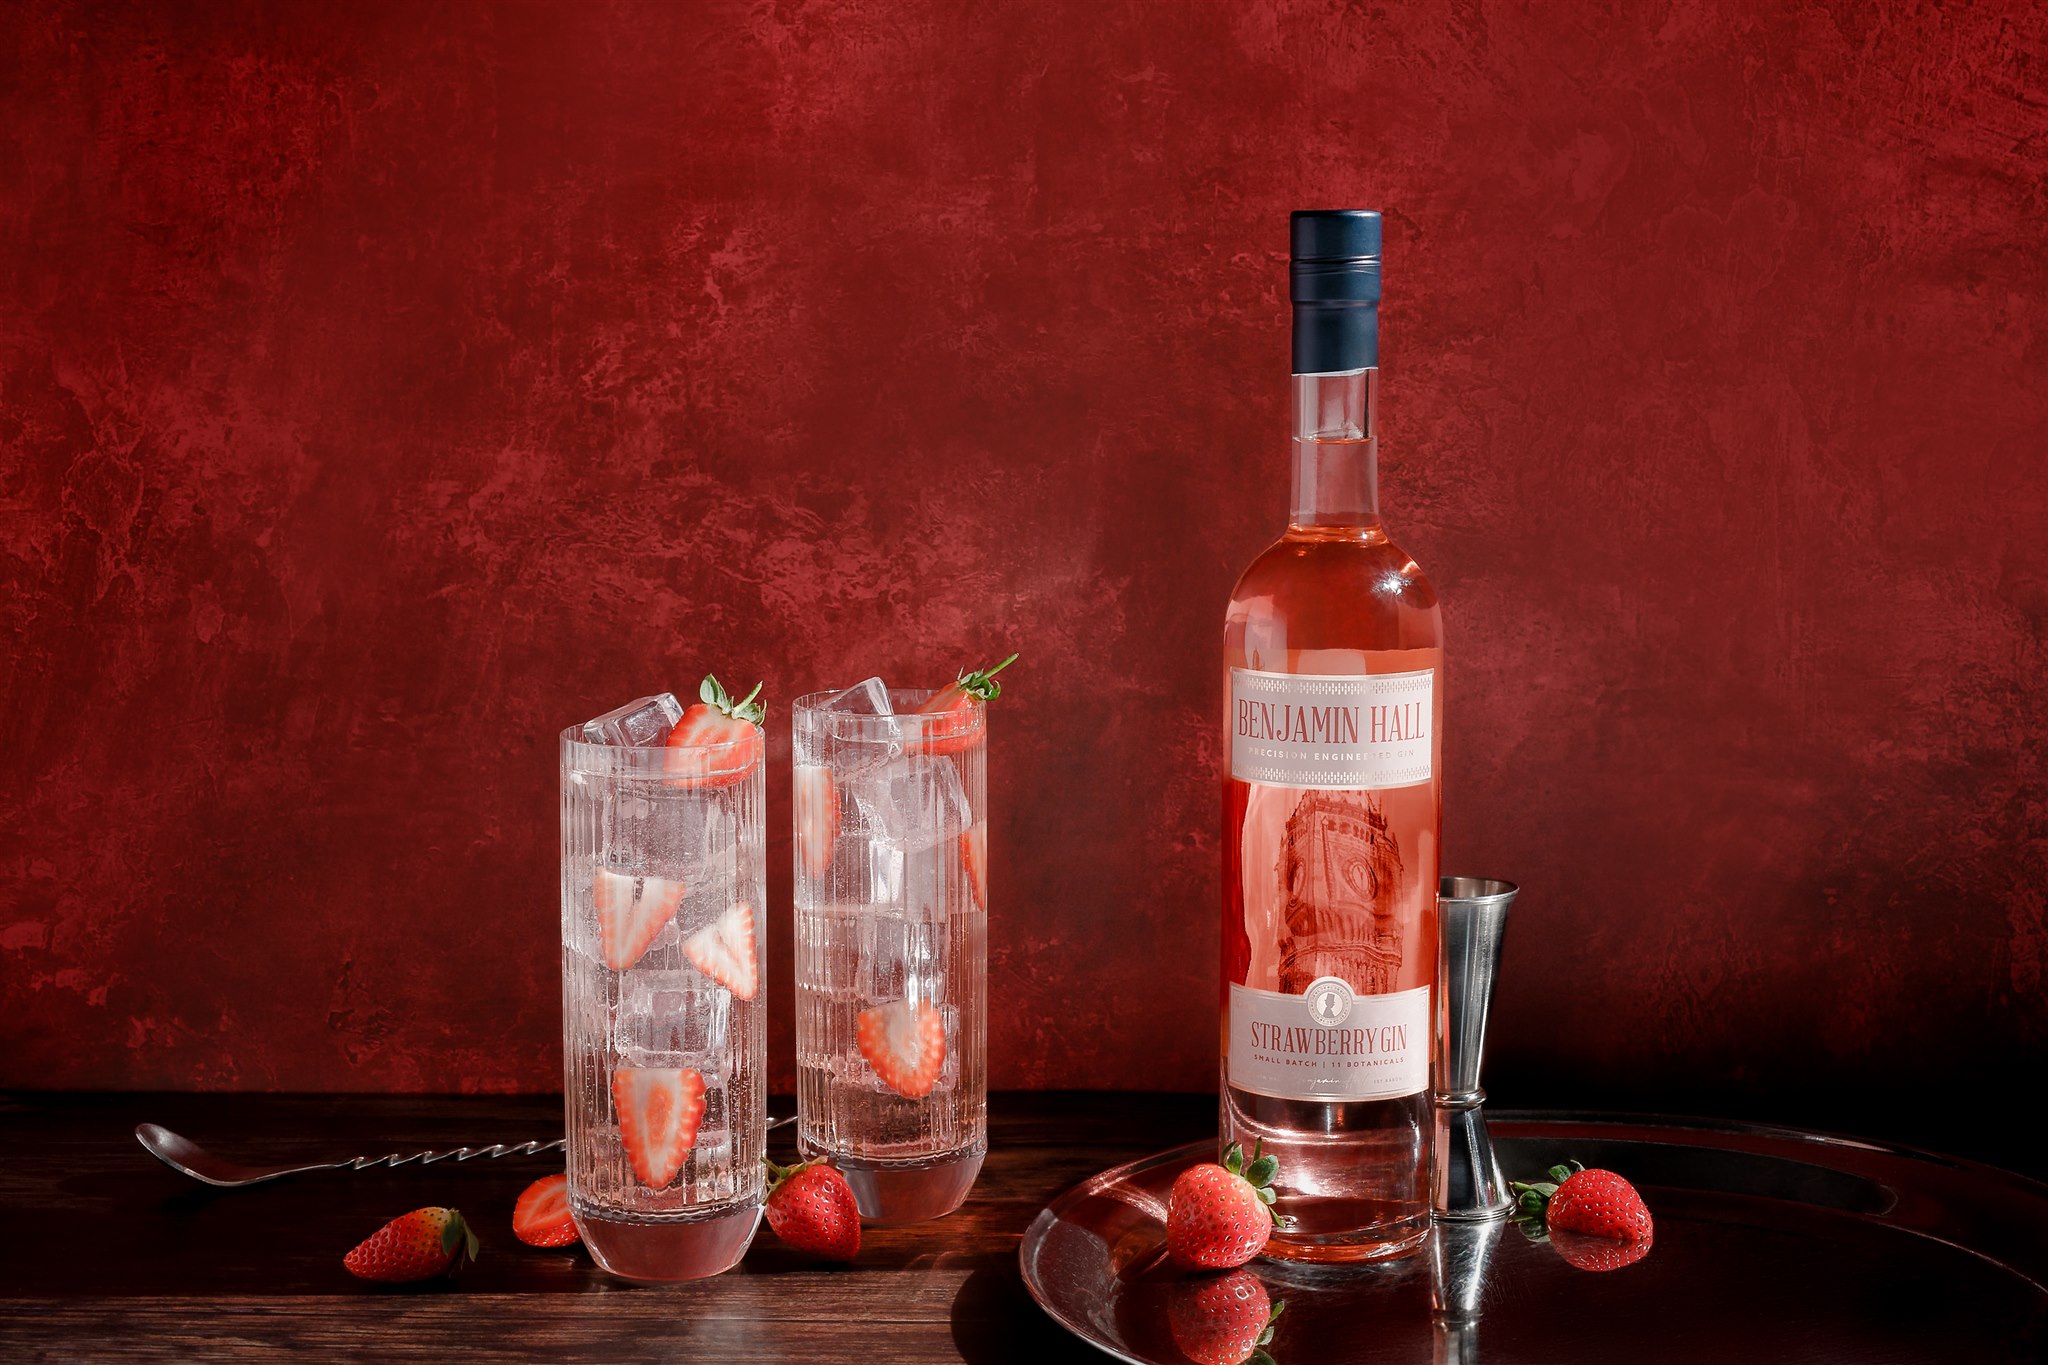 Benjamin Hall Strawberry Gin